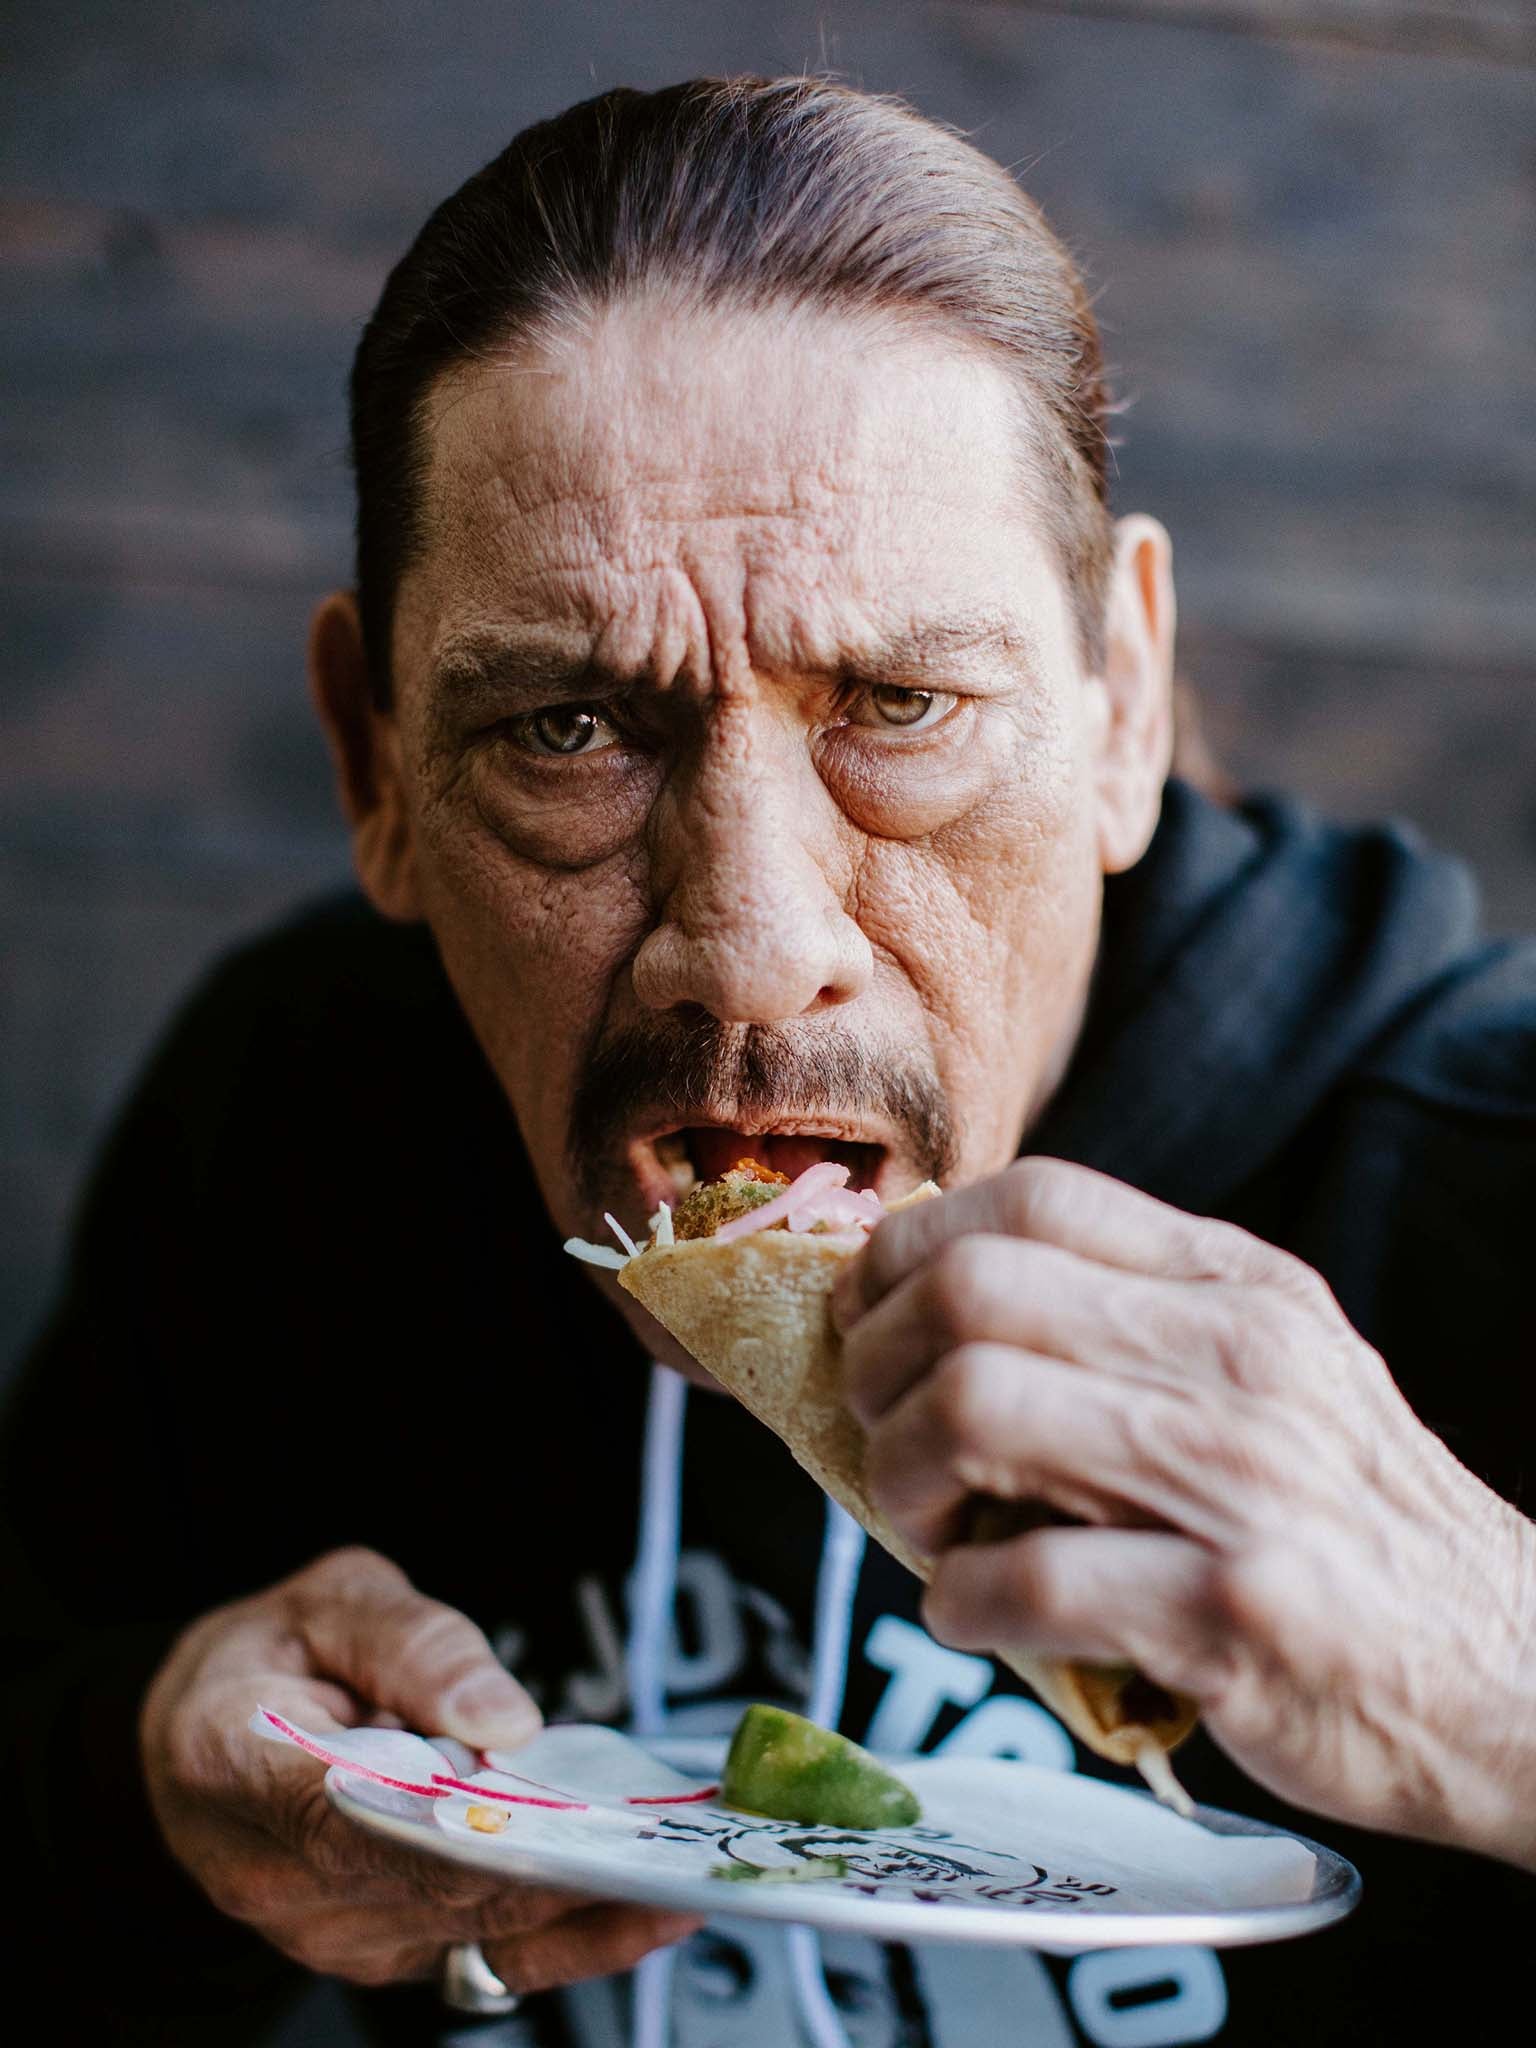 hollywood hardman danny trejo on opening a taco restaurant at 80: ‘no killings and mayhem? not my remit’